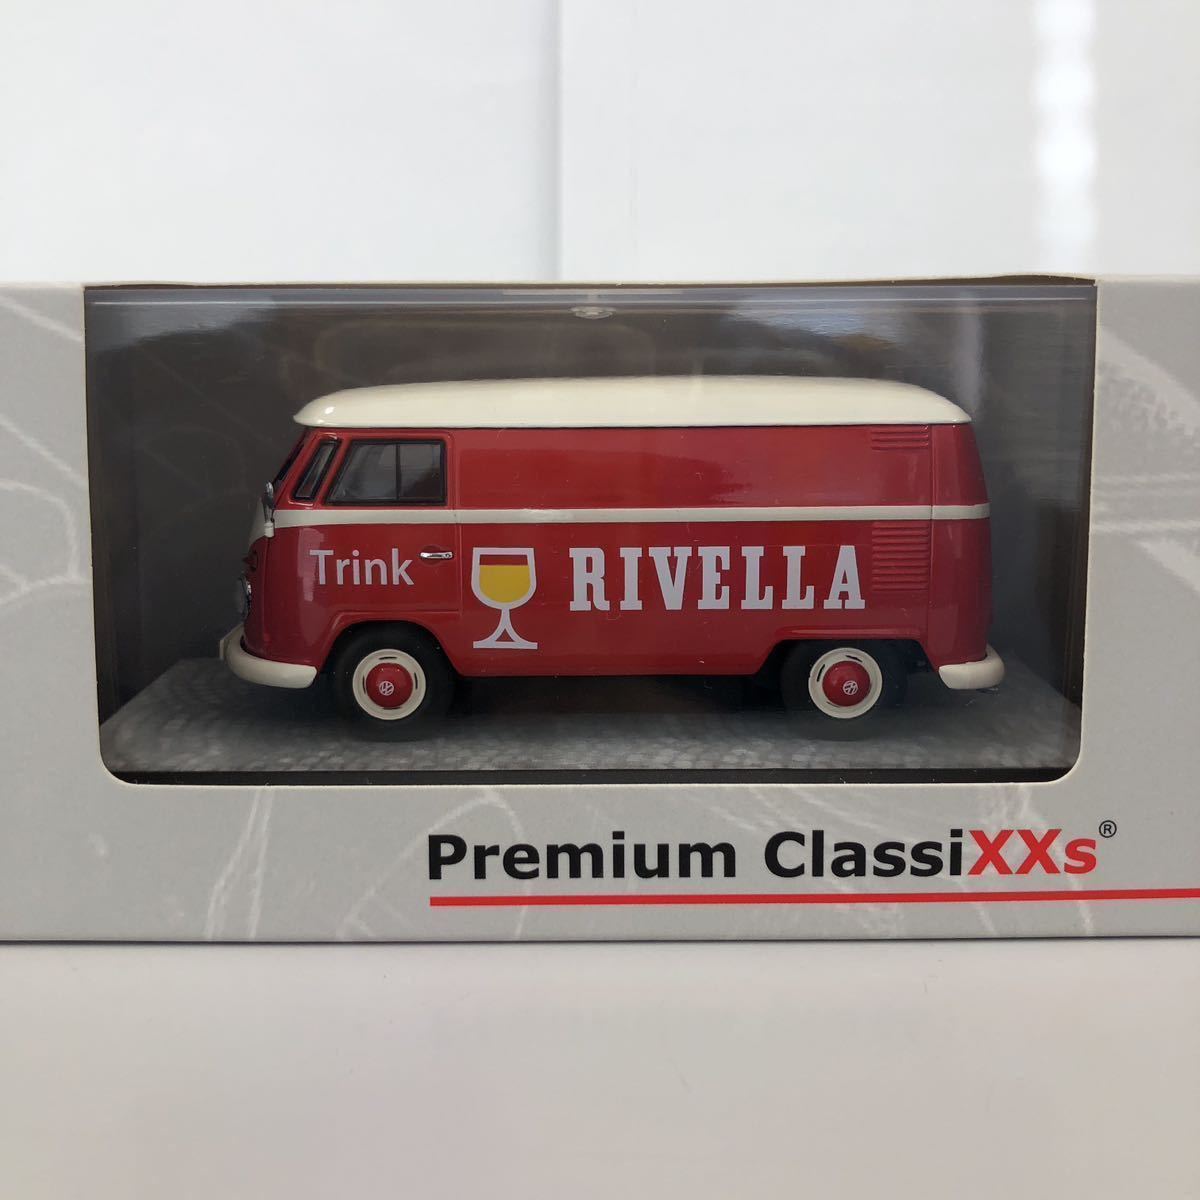 Premium ClassiXXs 1/43 VW T1 Kasten Rivella 13800-001 プレミアム